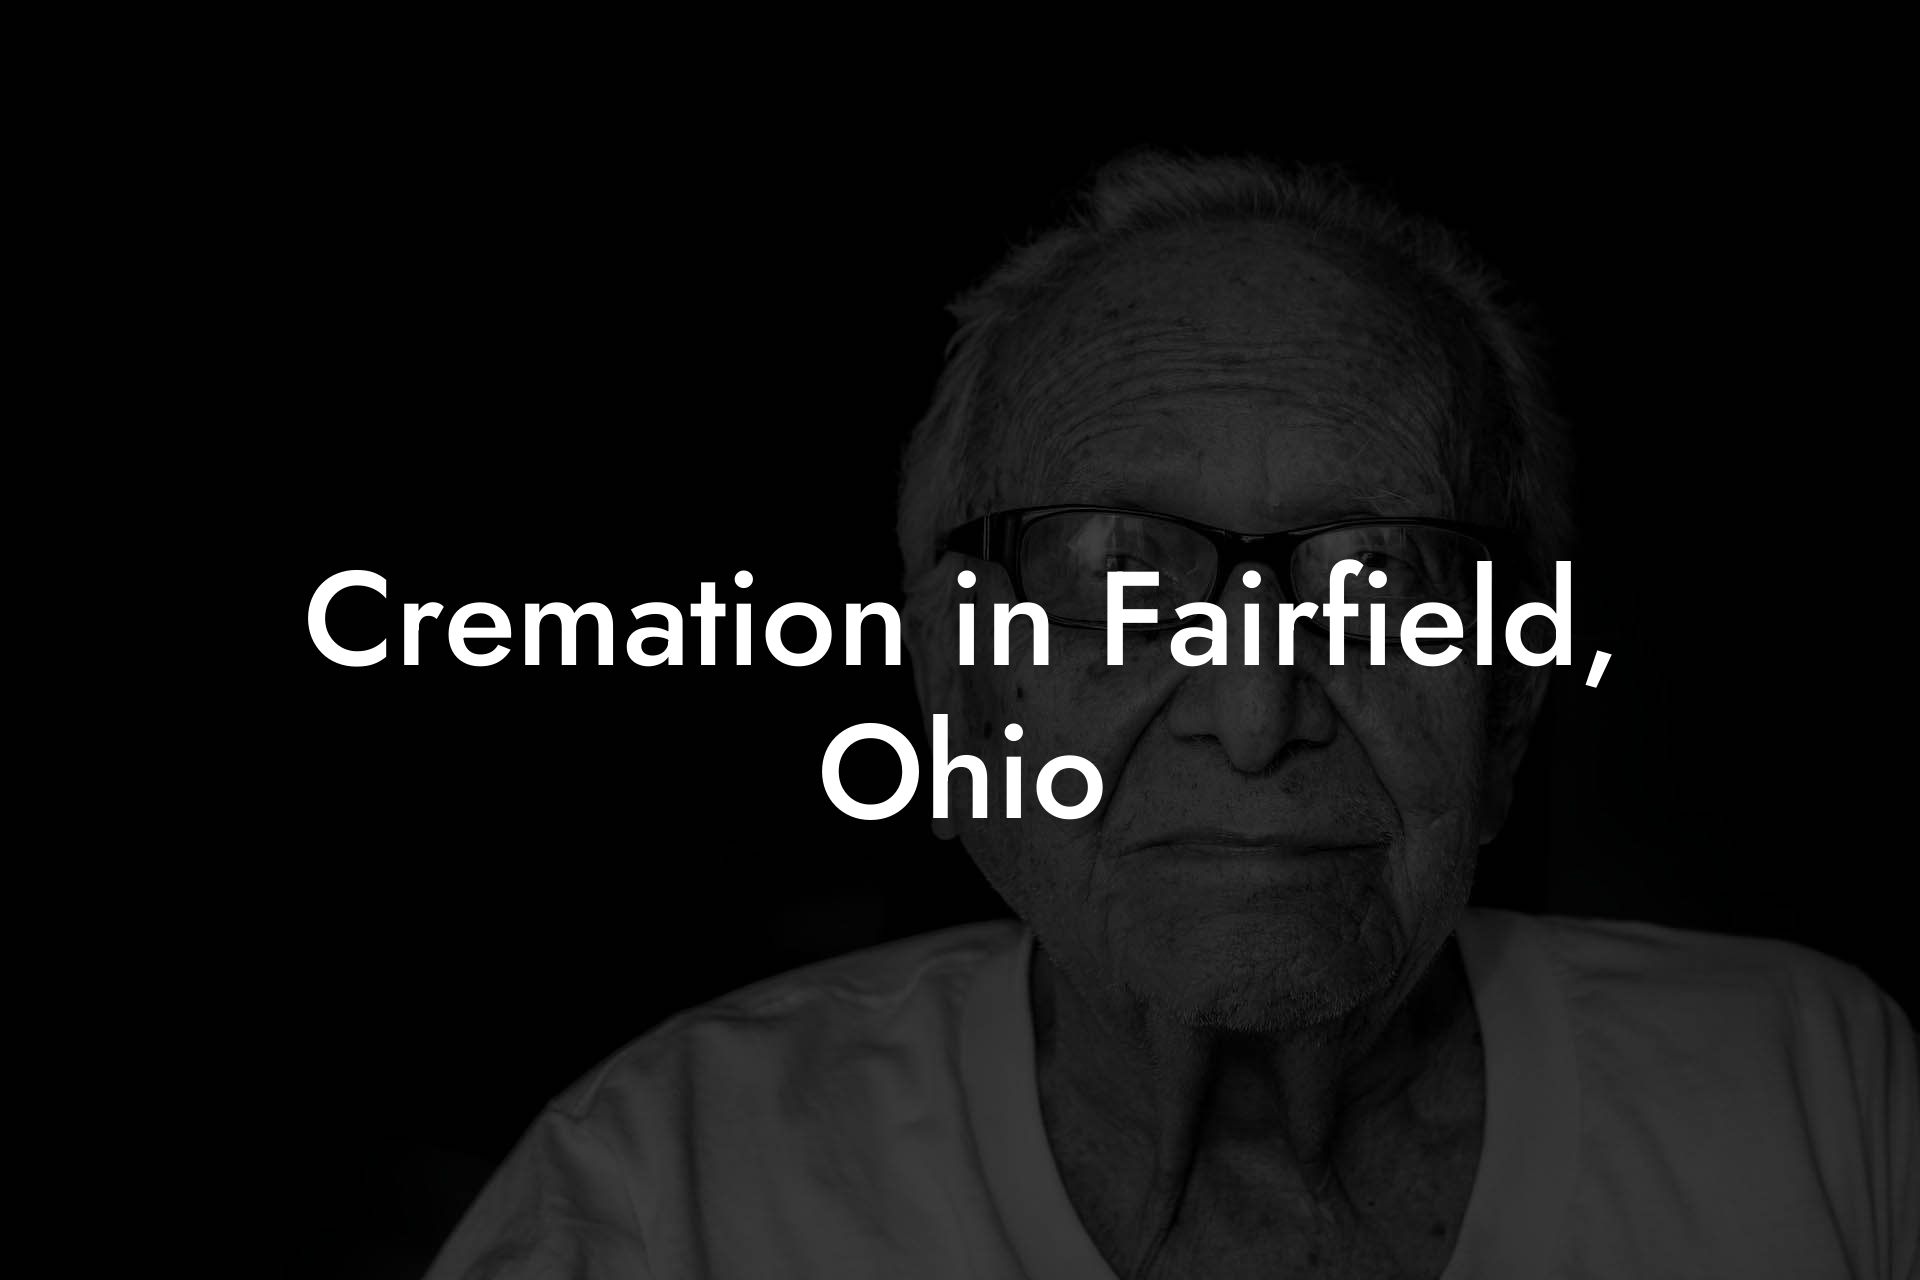 Cremation in Fairfield, Ohio